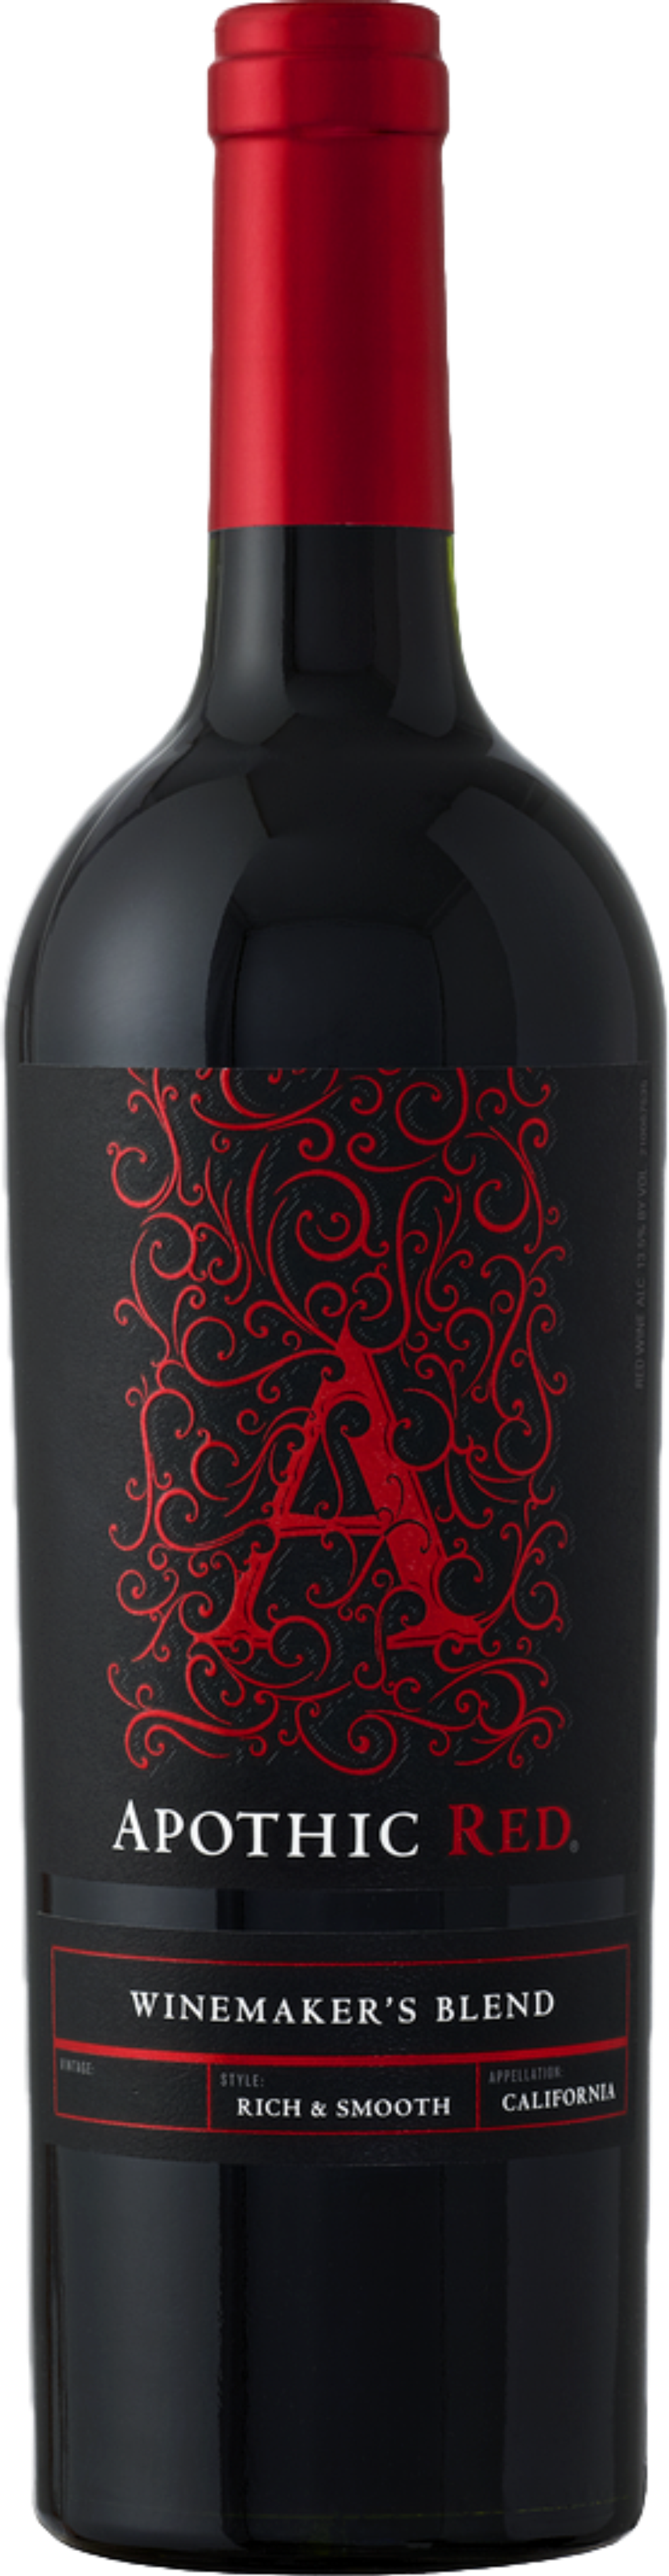 https://www.bottlevalues.com/images/sites/bottlevalues/labels/apothic-winemaker-s-red-blend_1.jpg